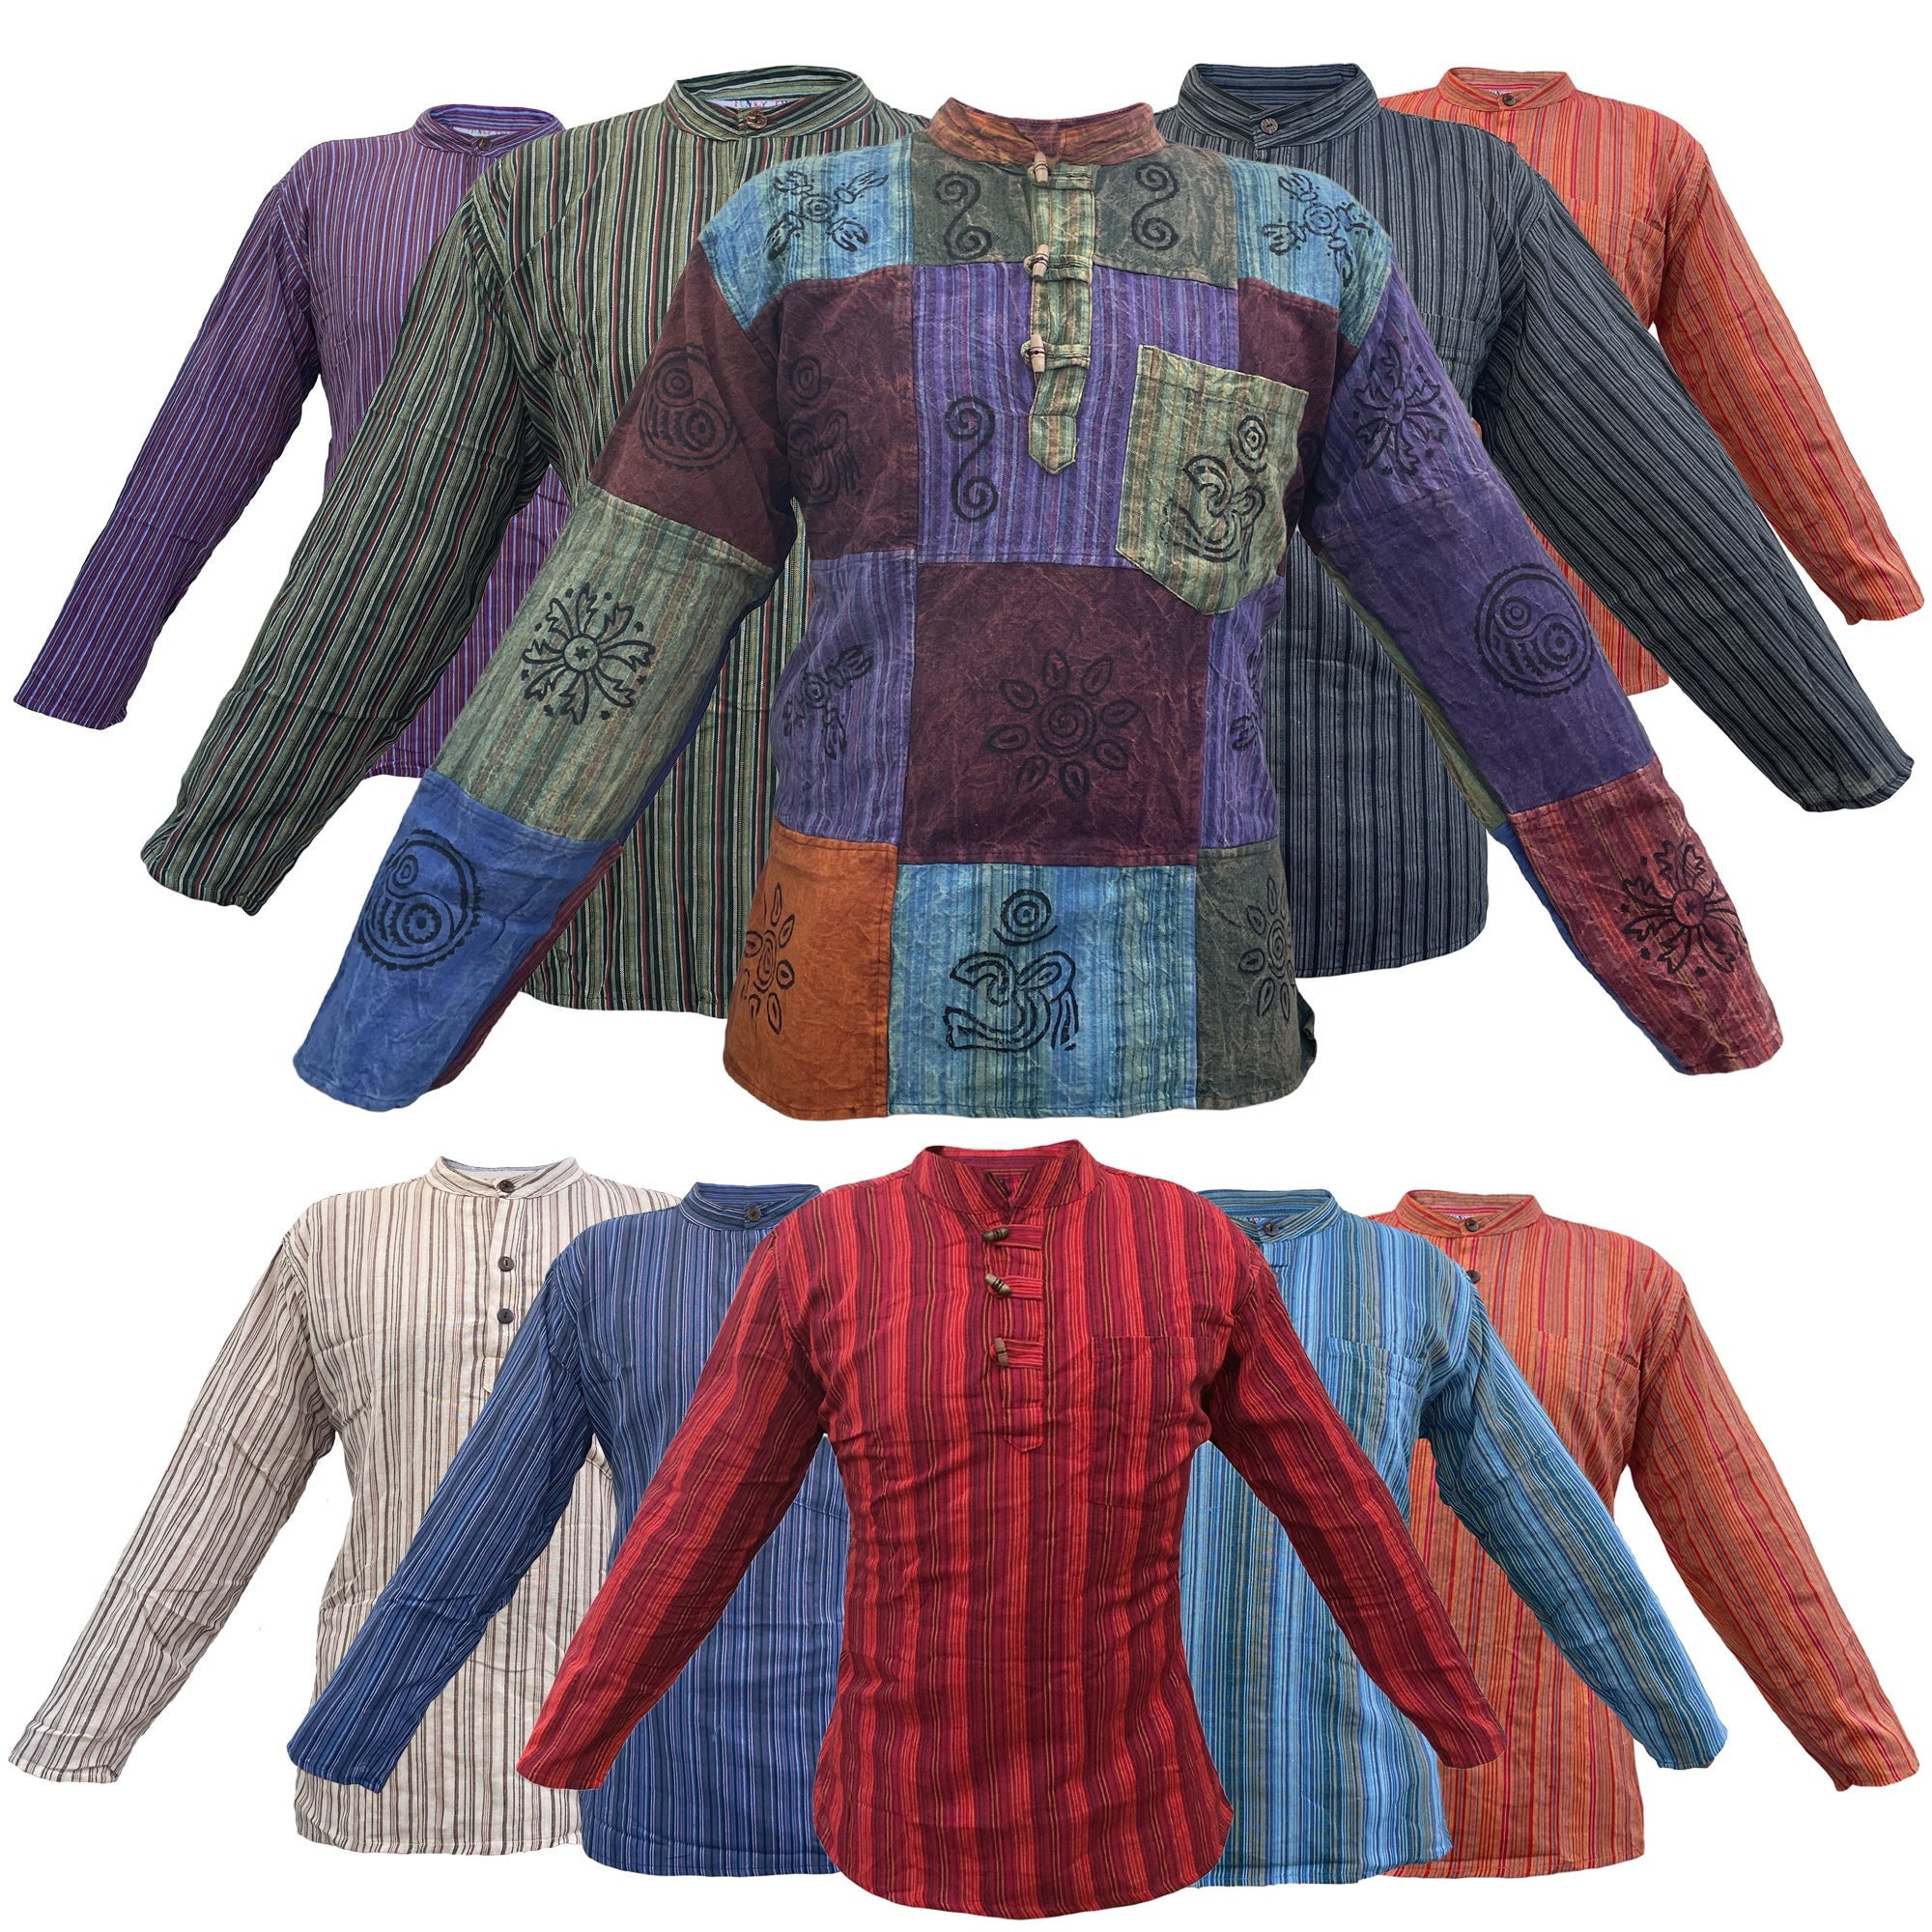 SHOPOHOLIC FASHION Stonewashed Stripe Shirt with Patchwork,Colorful,Hippie 